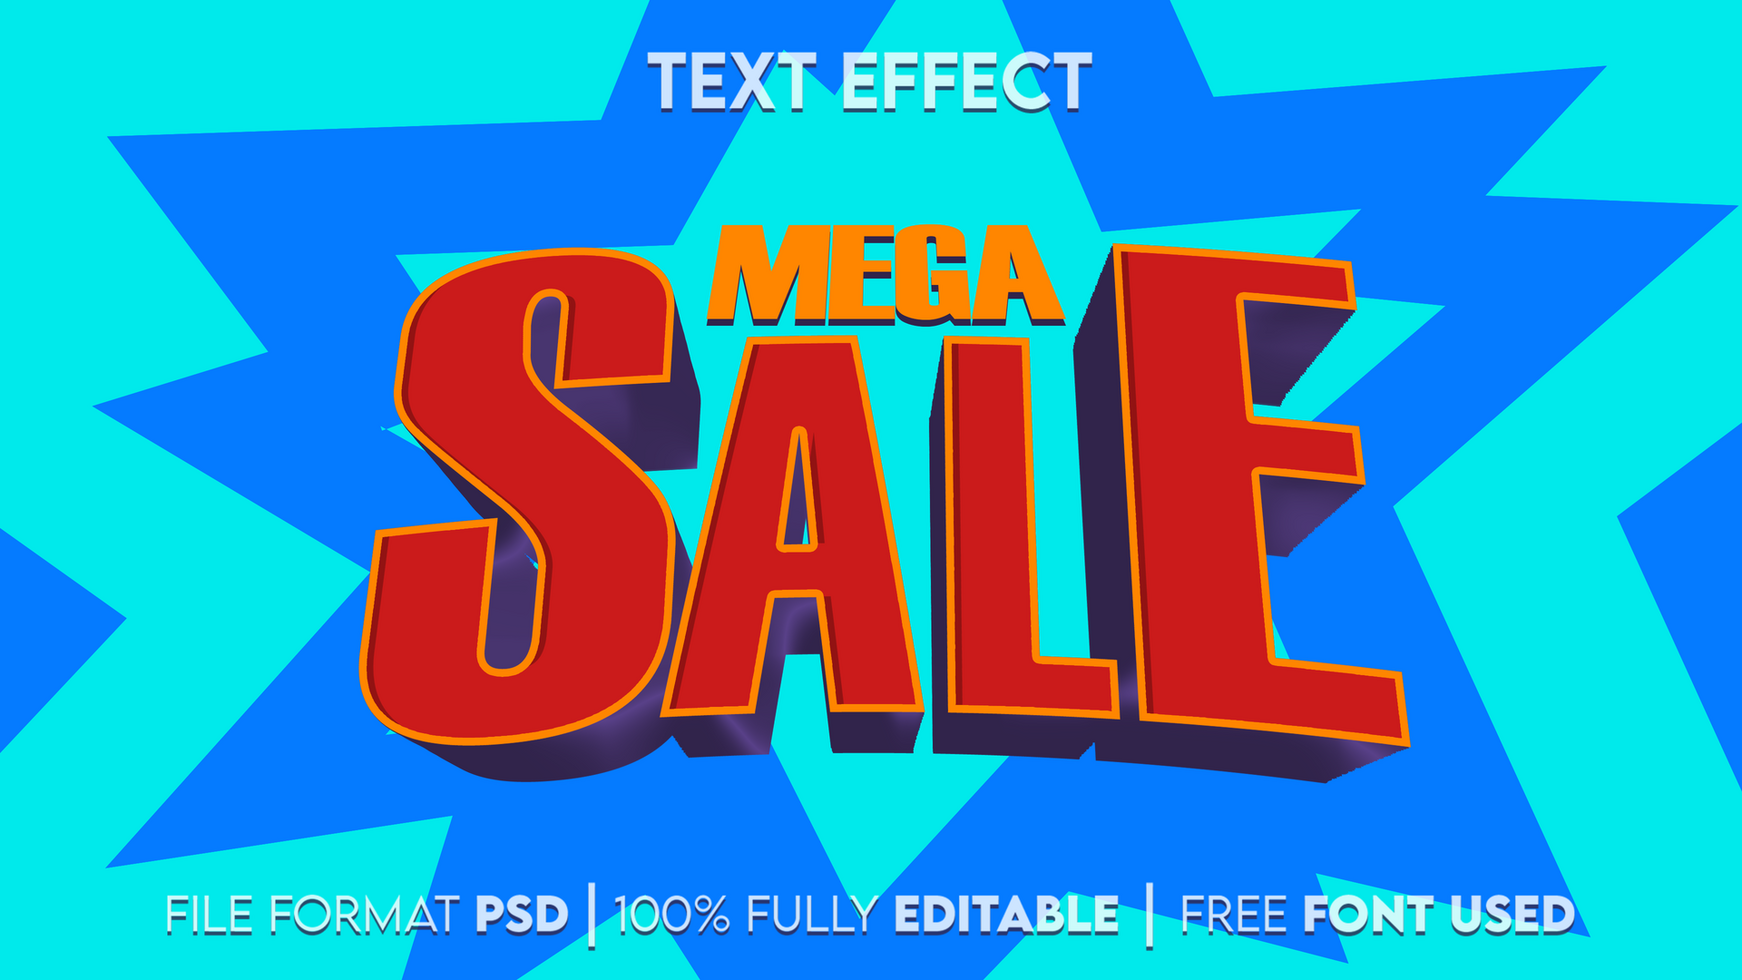 Mega Sale text effect with aqua background psd